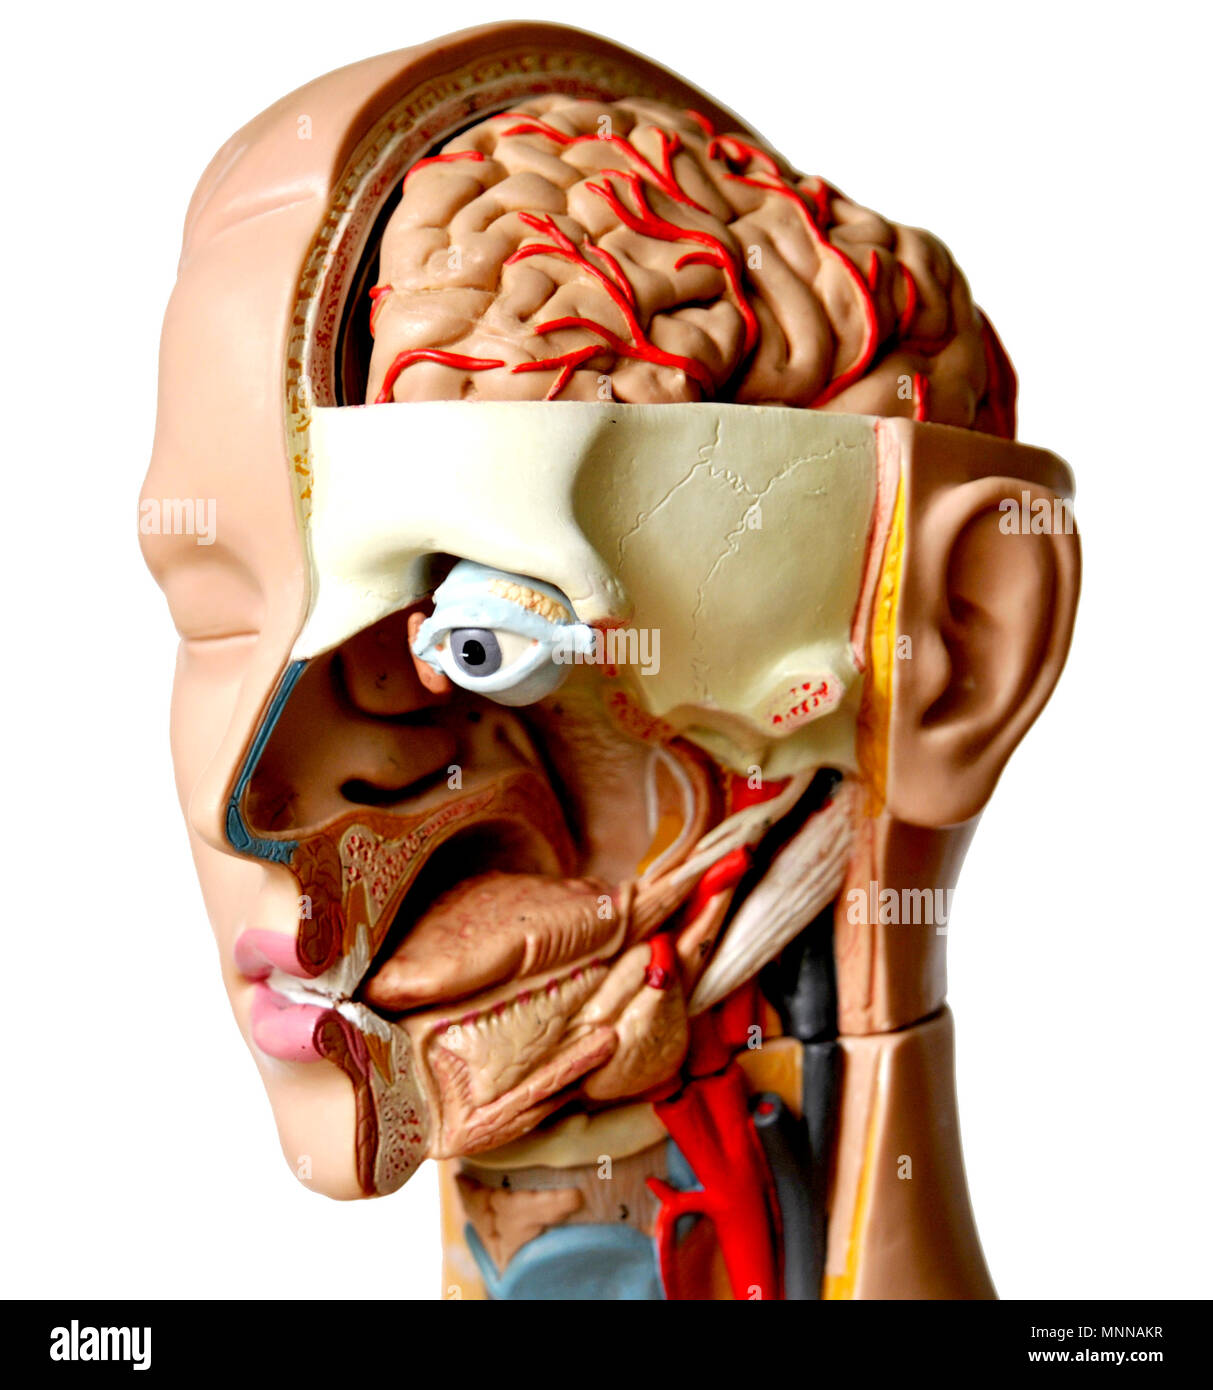 Anatomic models; anatomische modelle Stock Photo - Alamy